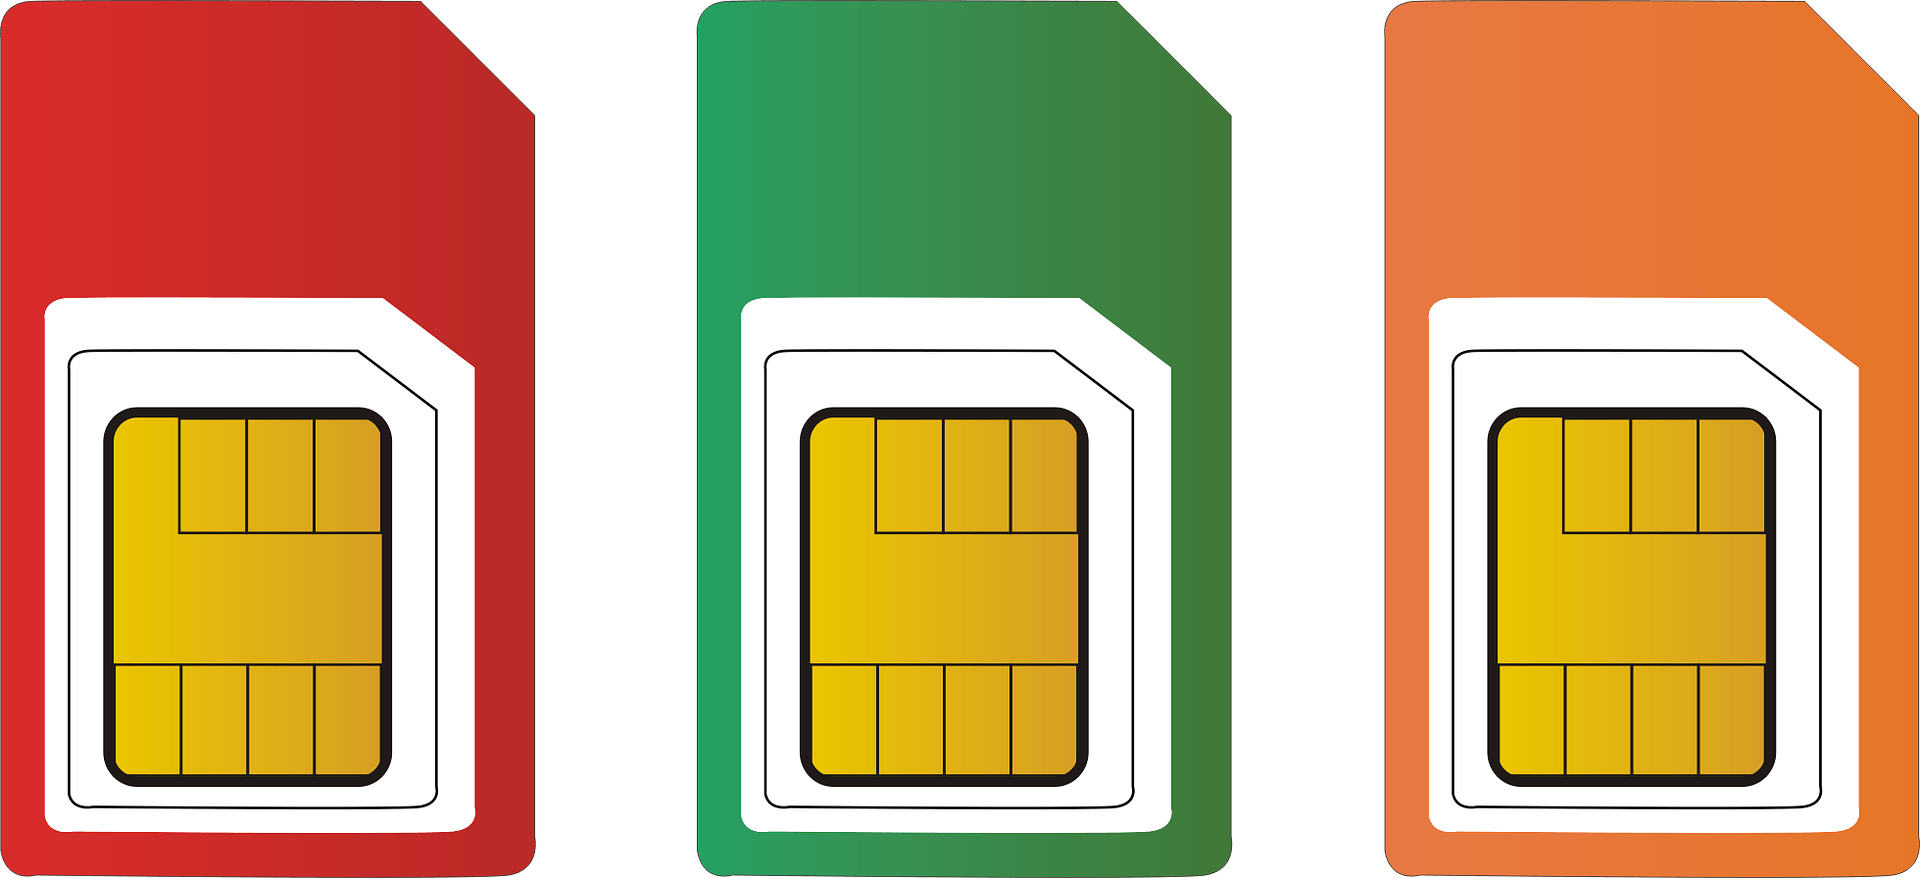 Why do SIM Cards have a Cut Corner